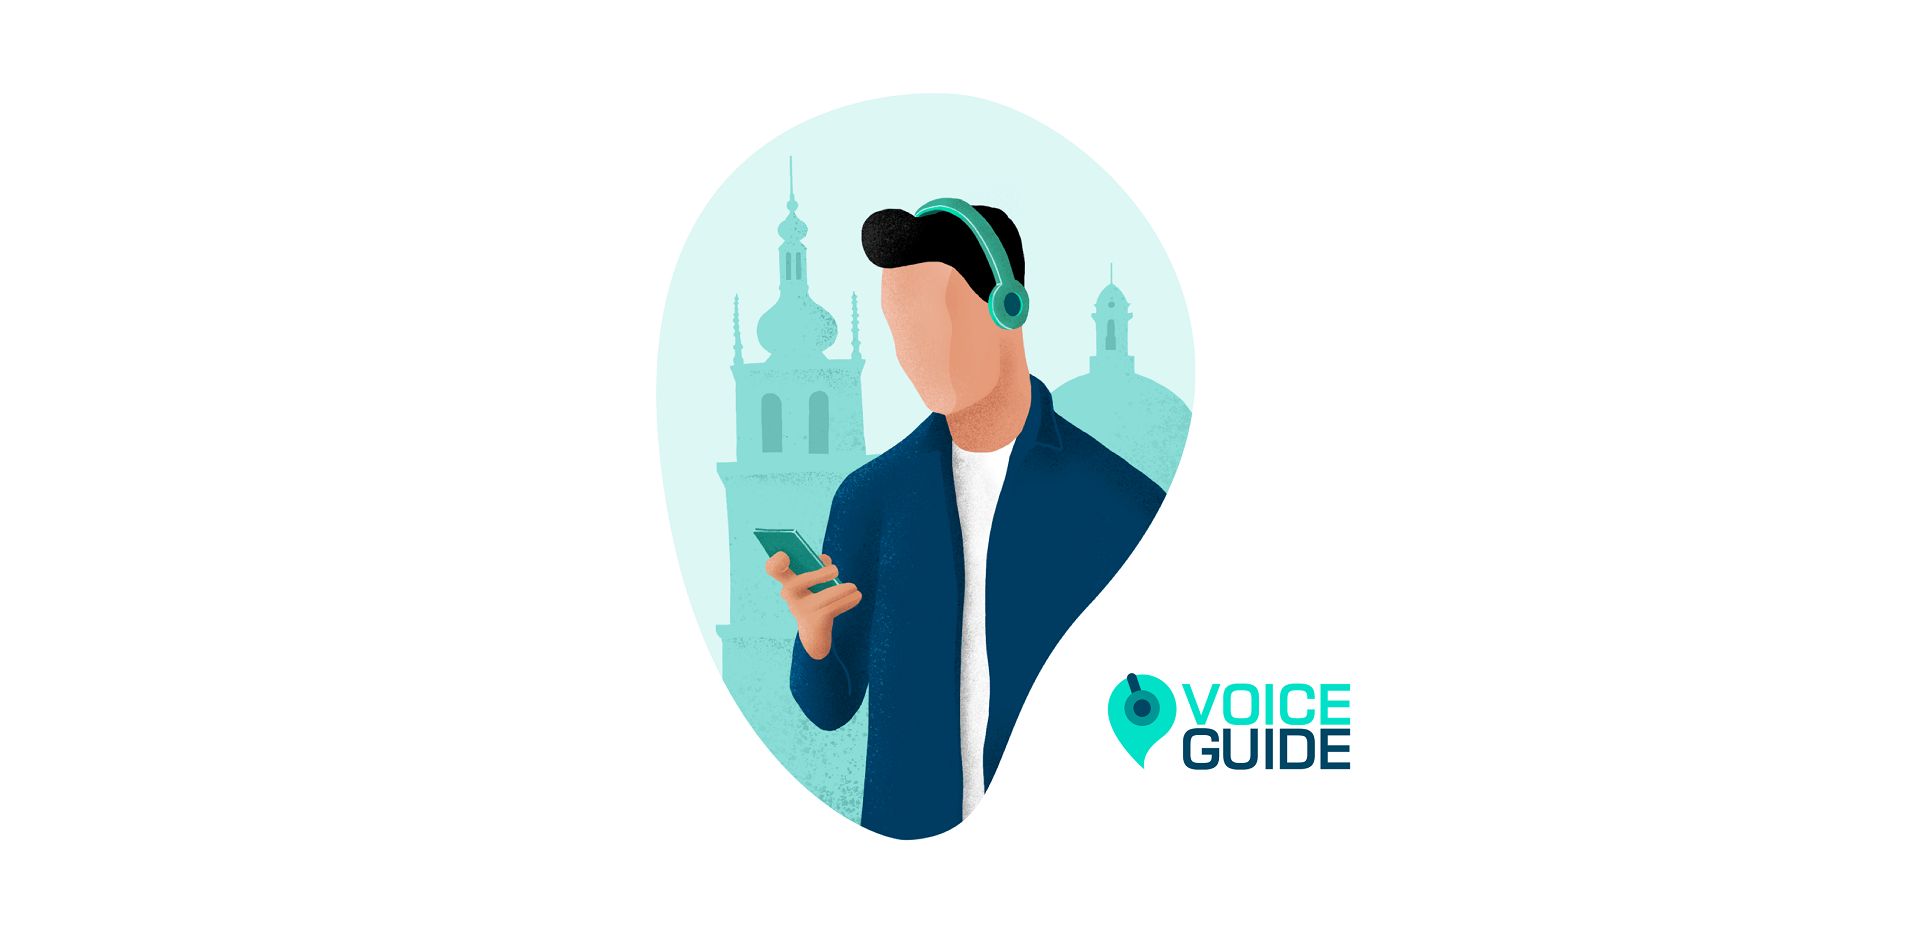 Travel app - Voice Guide